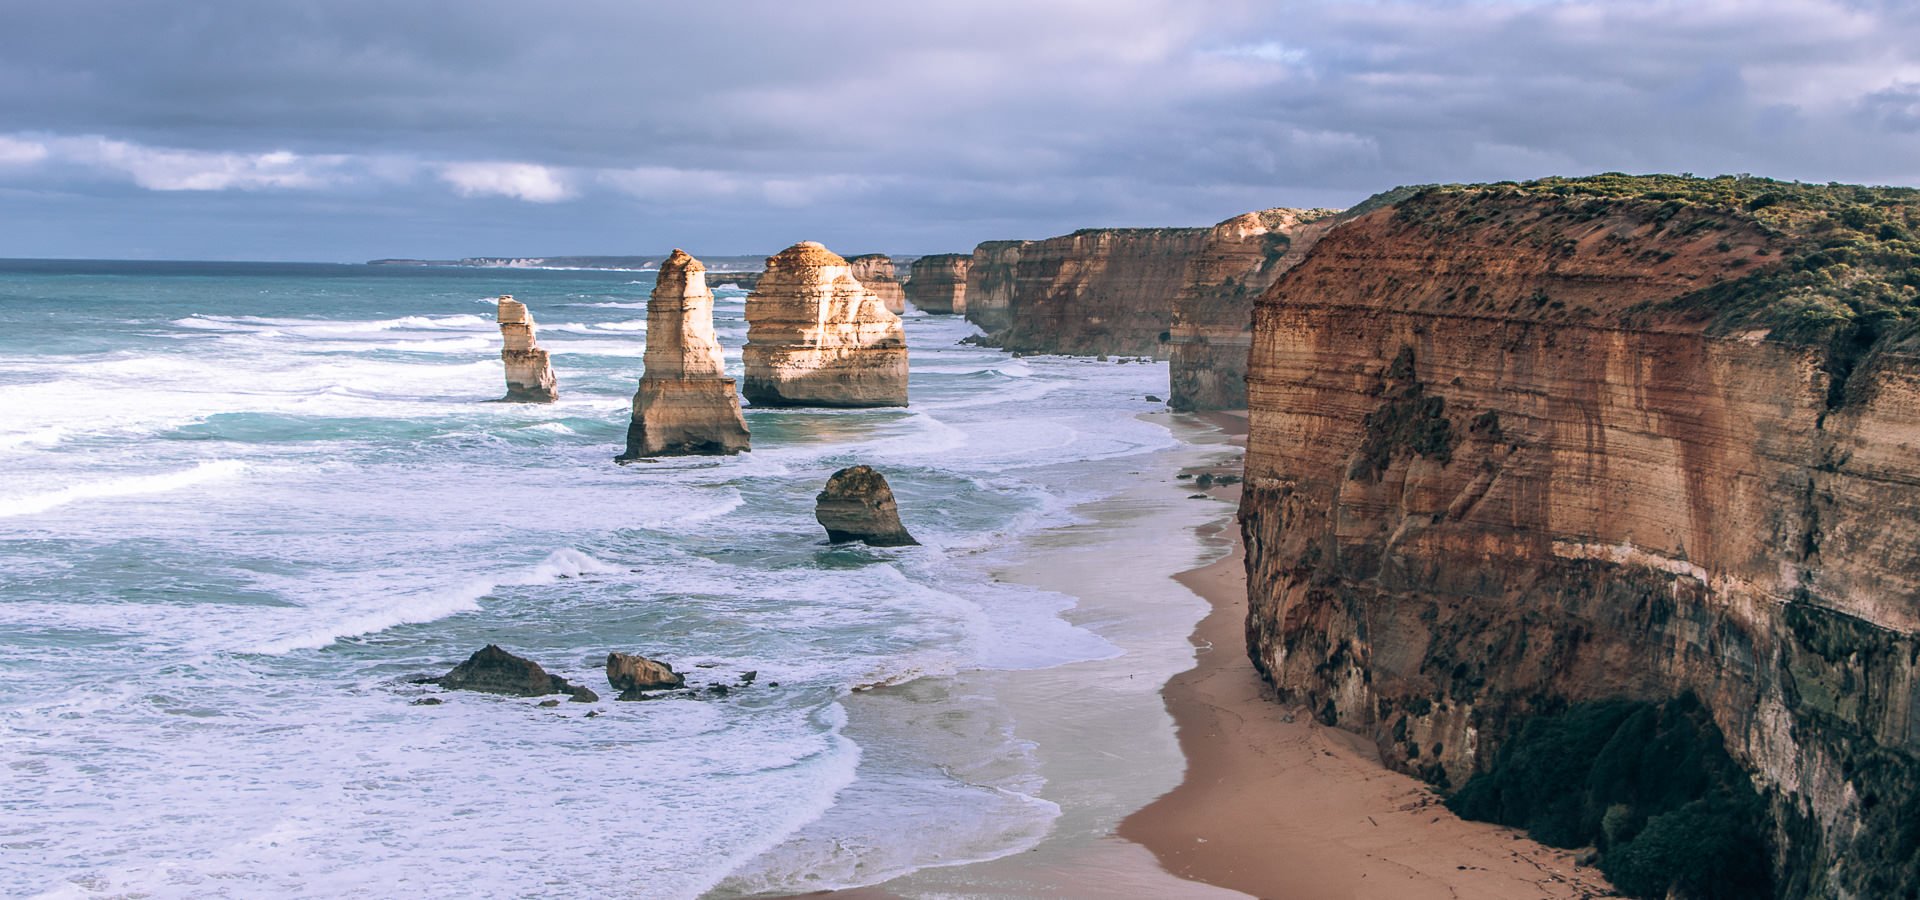 Beach Destinations Australia | 25 Sensational Places To Visit | beach destinations australia 1